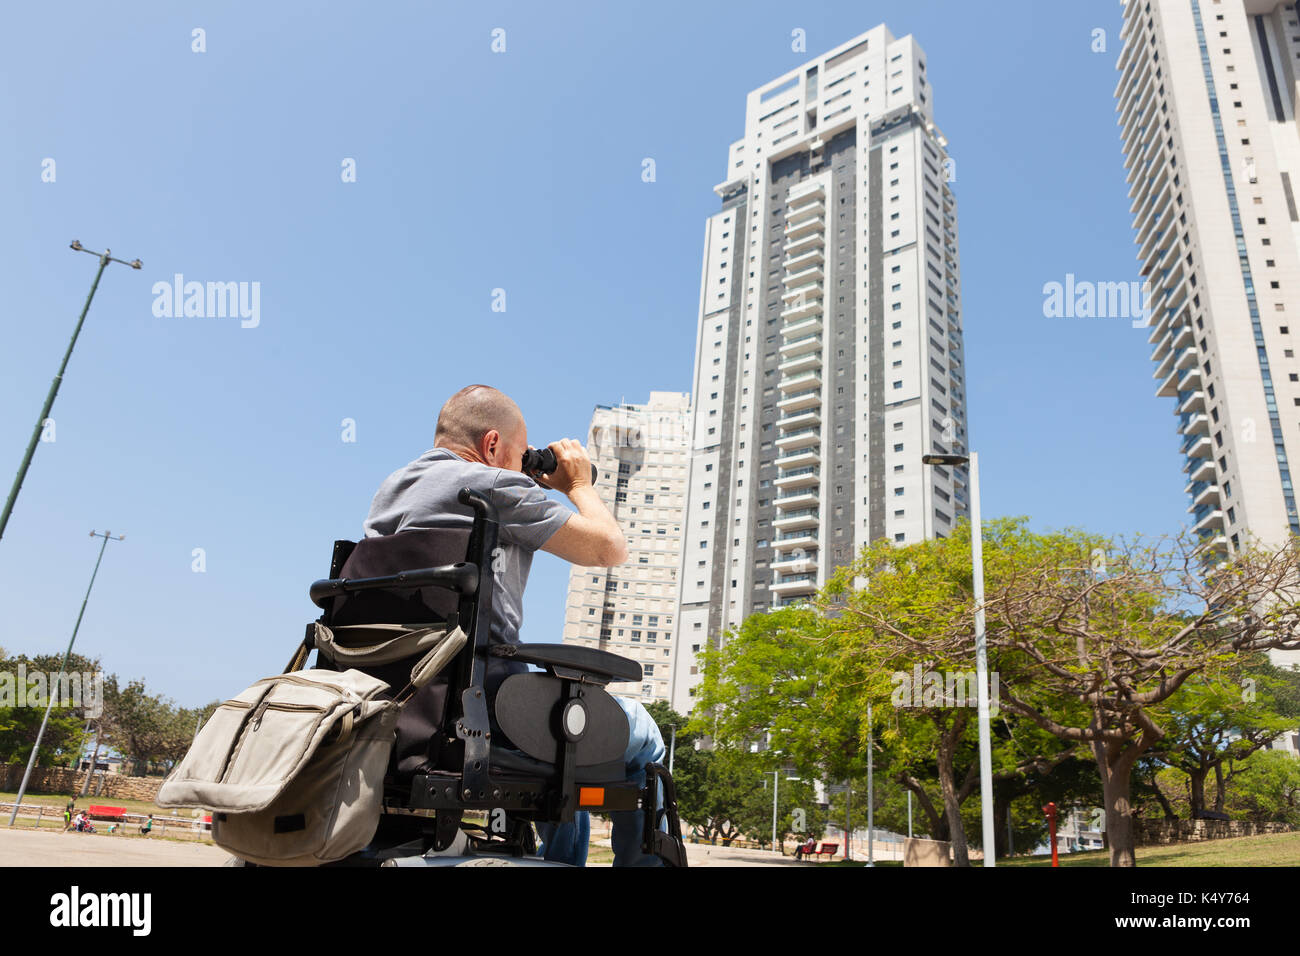 A disabled man in a wheelchair looks through binoculars Stock Photo